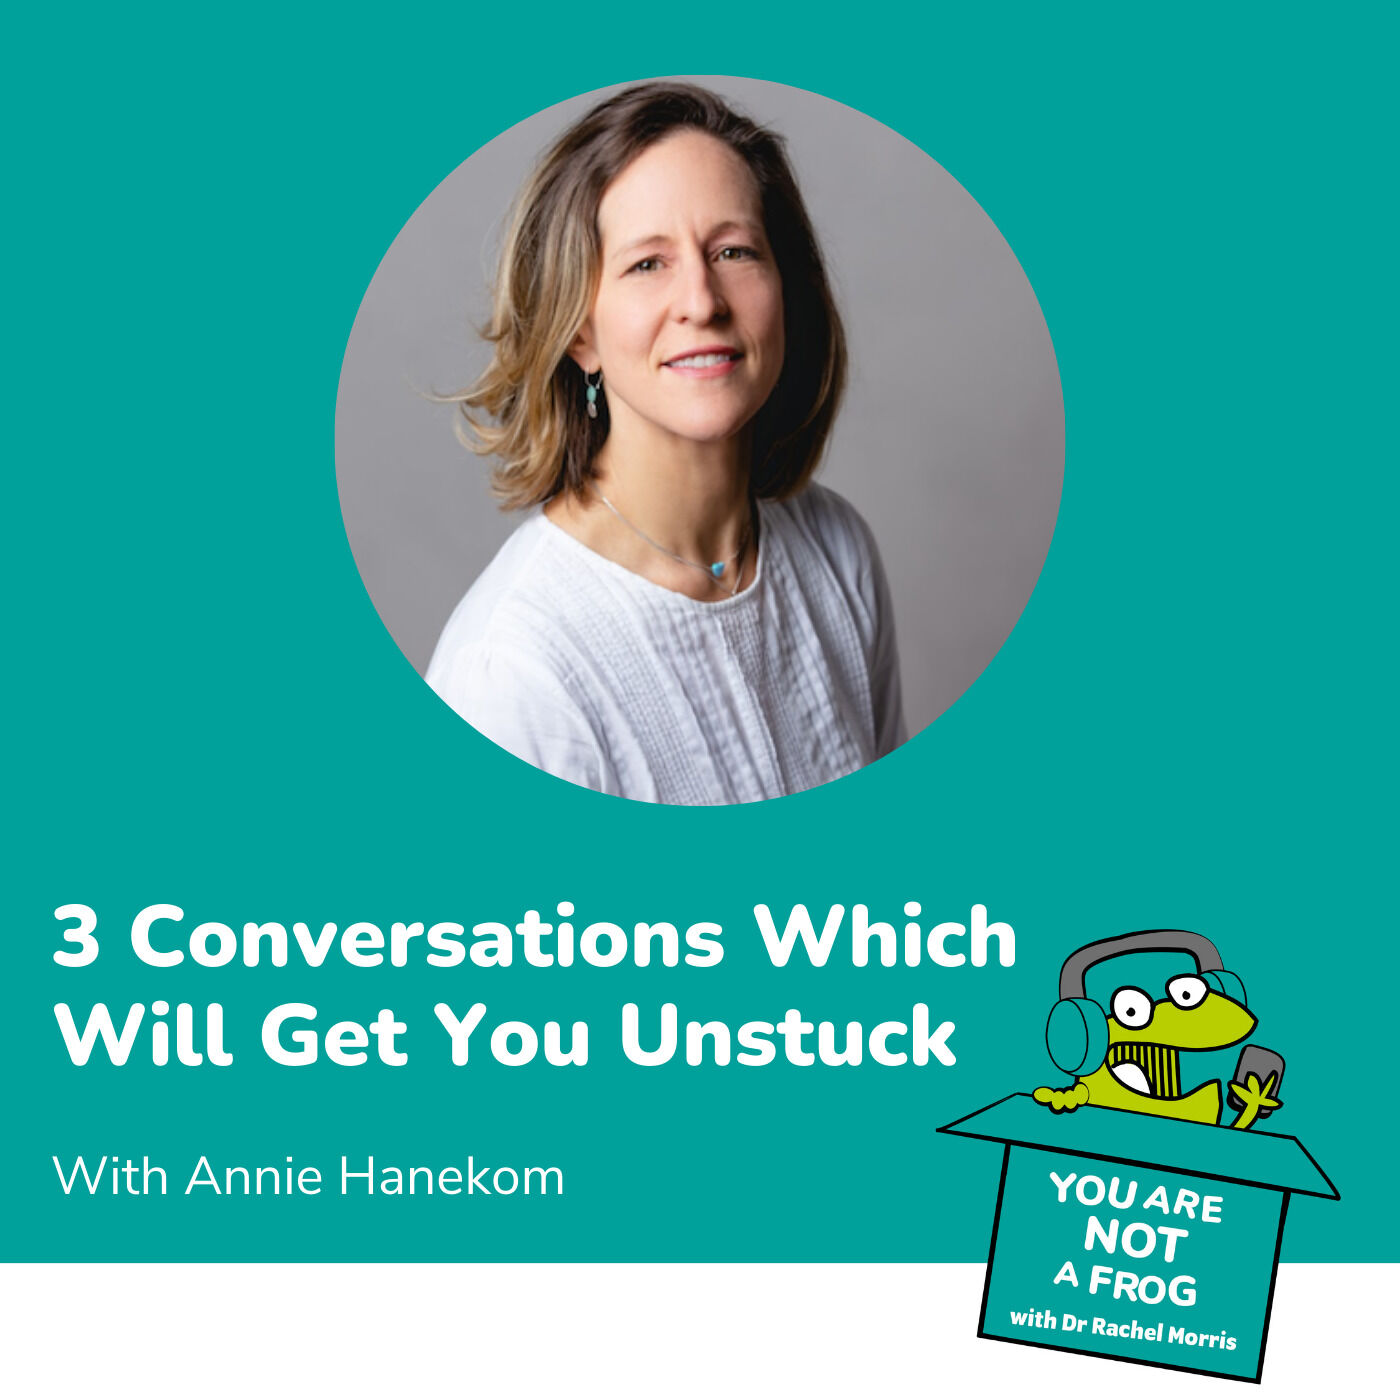 3 Conversations Which Will Get You Unstuck with Annie Hanekom